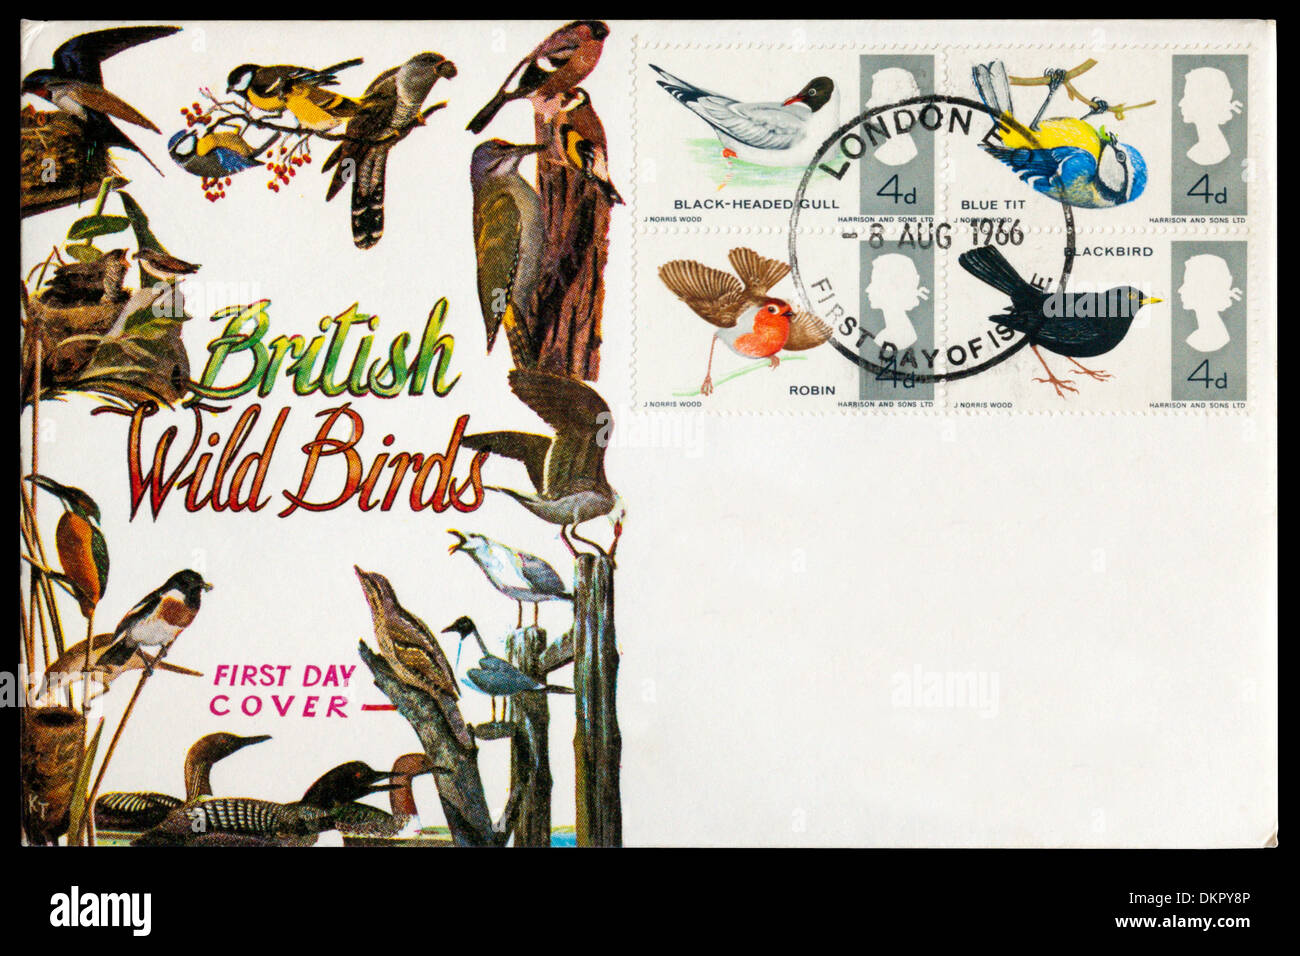 1966 First Day Cover celebrating British Wild Birds. Stock Photo